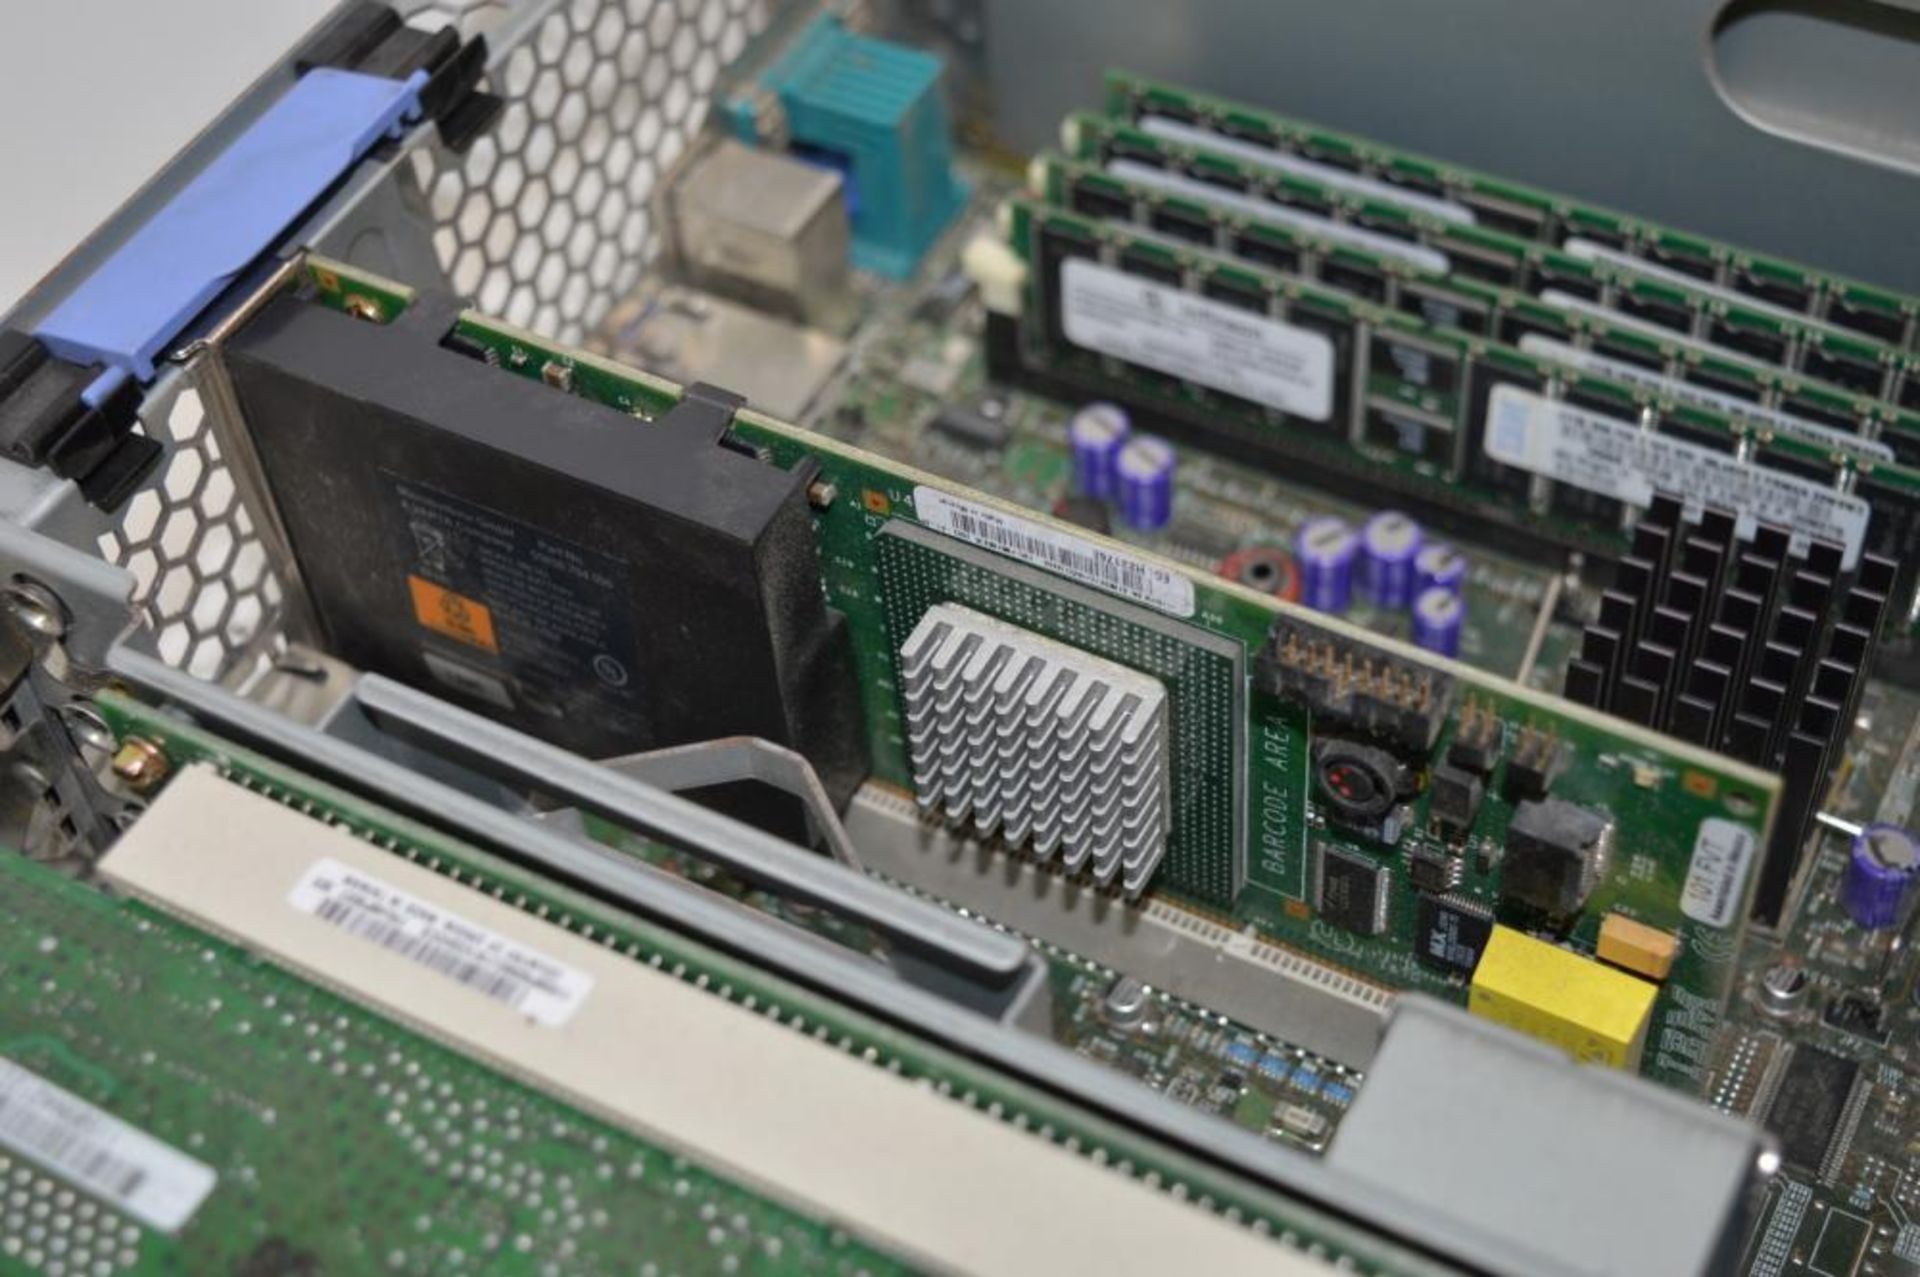 1 x IBM xSeries 345 Server - Includes Dual Xeon Processors, 1gb Ram, Raid Card - Hard Disk Drives - Image 6 of 6